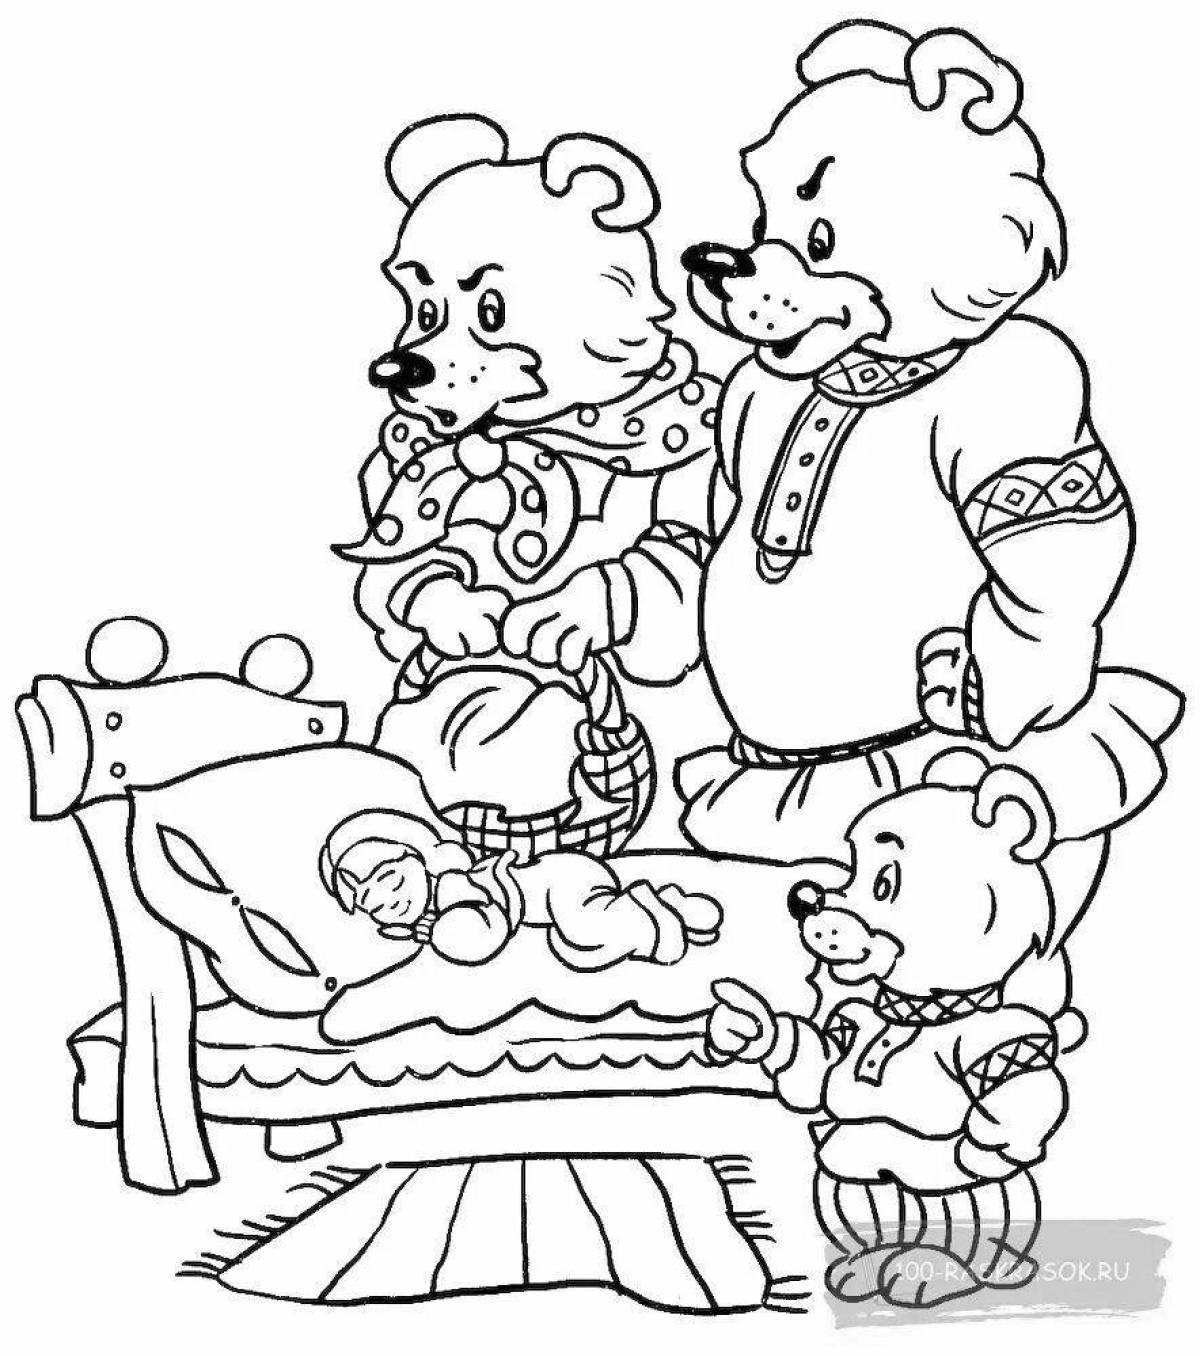 Three bears coloring book for preschoolers